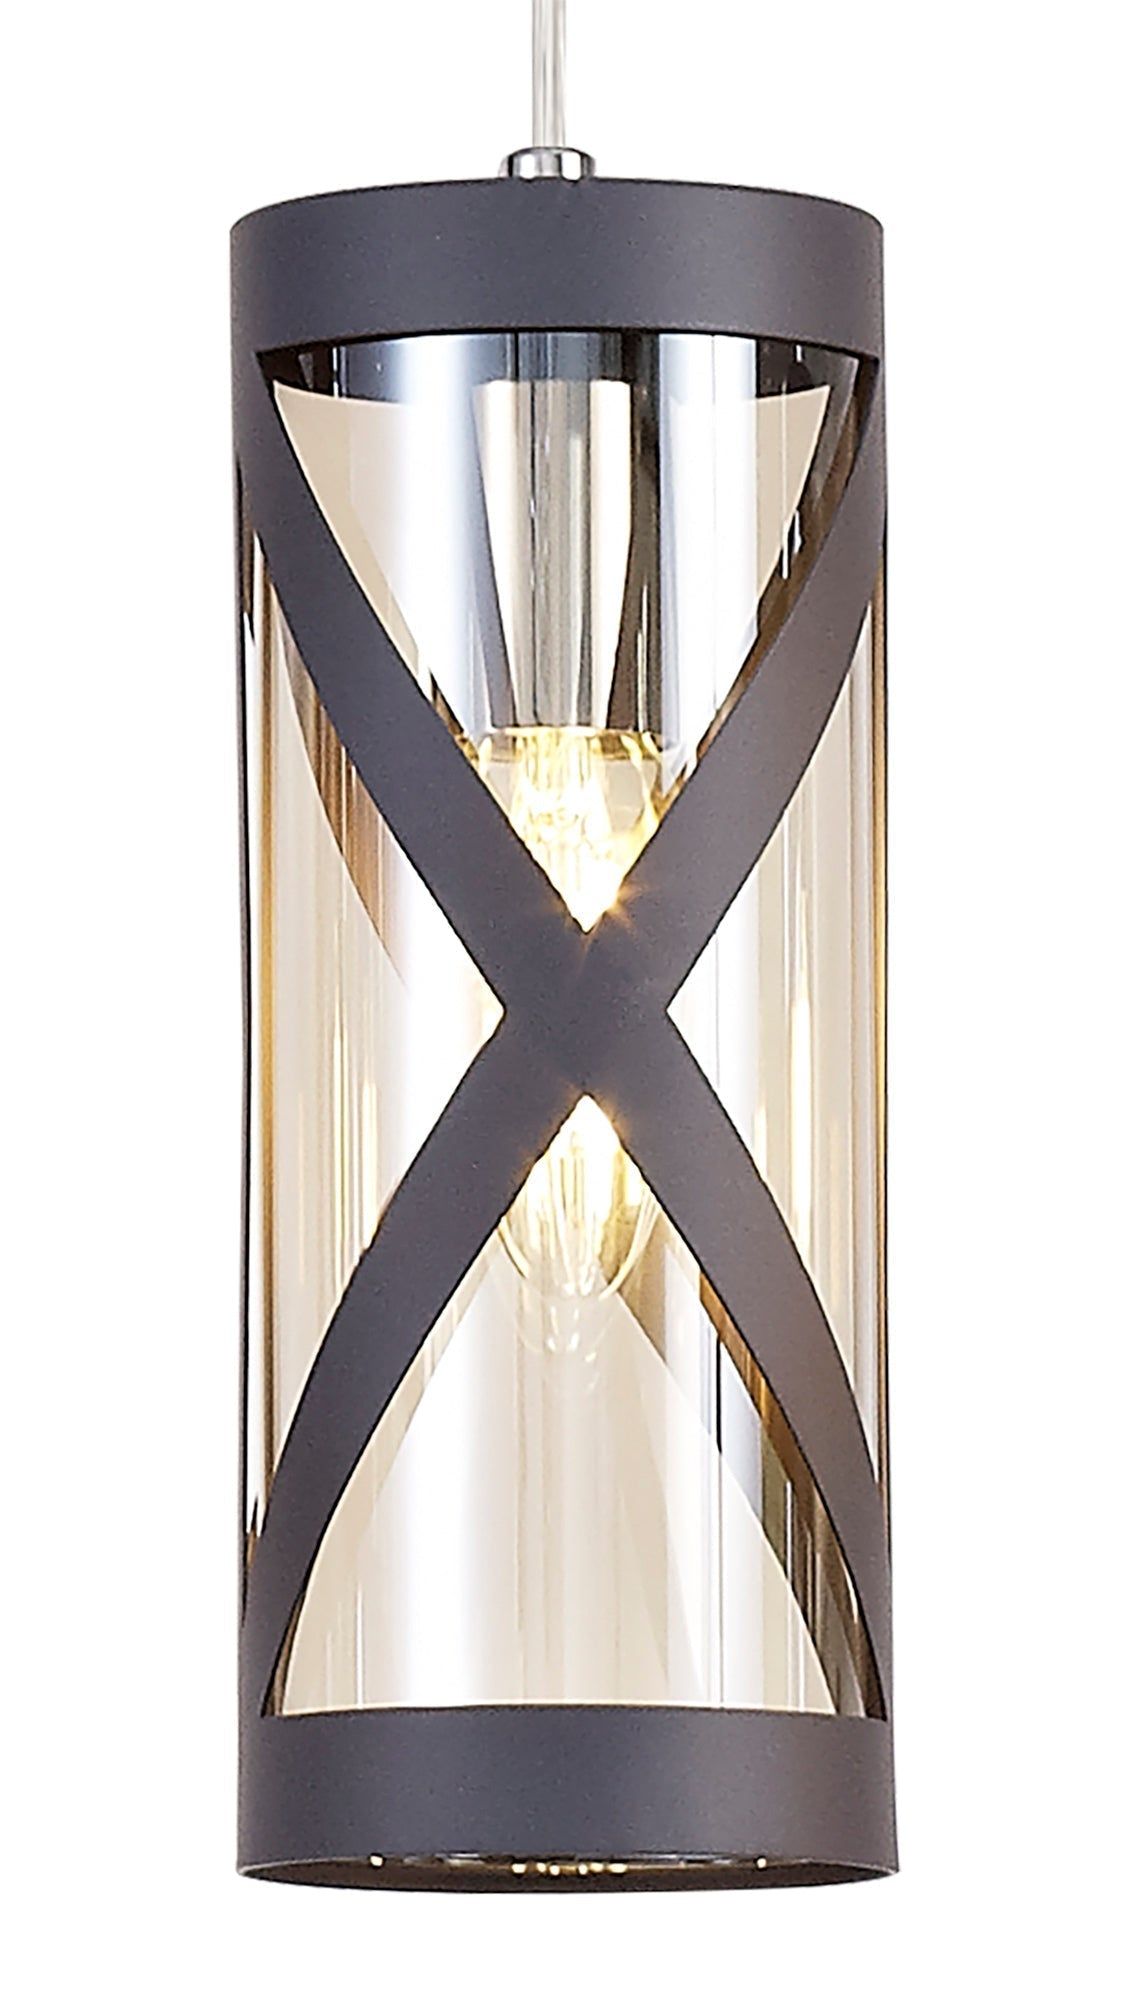 Taeims 4 Light Bar Linear Pendant E14, Oiled Bronze/Matt Grey/Polished Chrome/Cognac